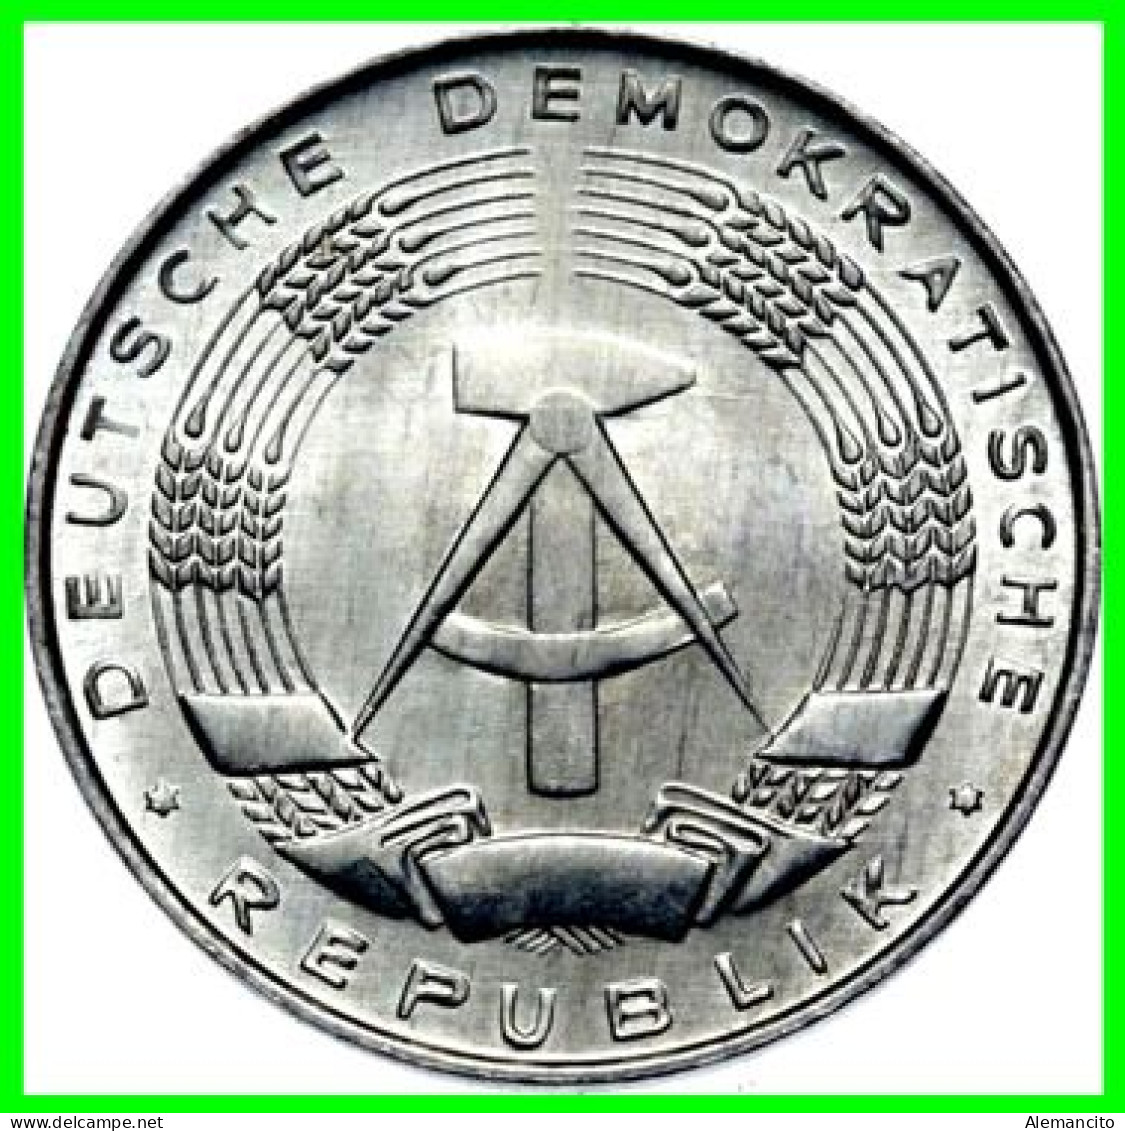 REPUBLICA DEMOCRATICA DE ALEMANIA ( DDR ) MONEDAS DE 1 PFENNING AÑO 1975 CECA-A MONEDA DE 17mm Obv.State ALUMINIO S/C - 1 Pfennig